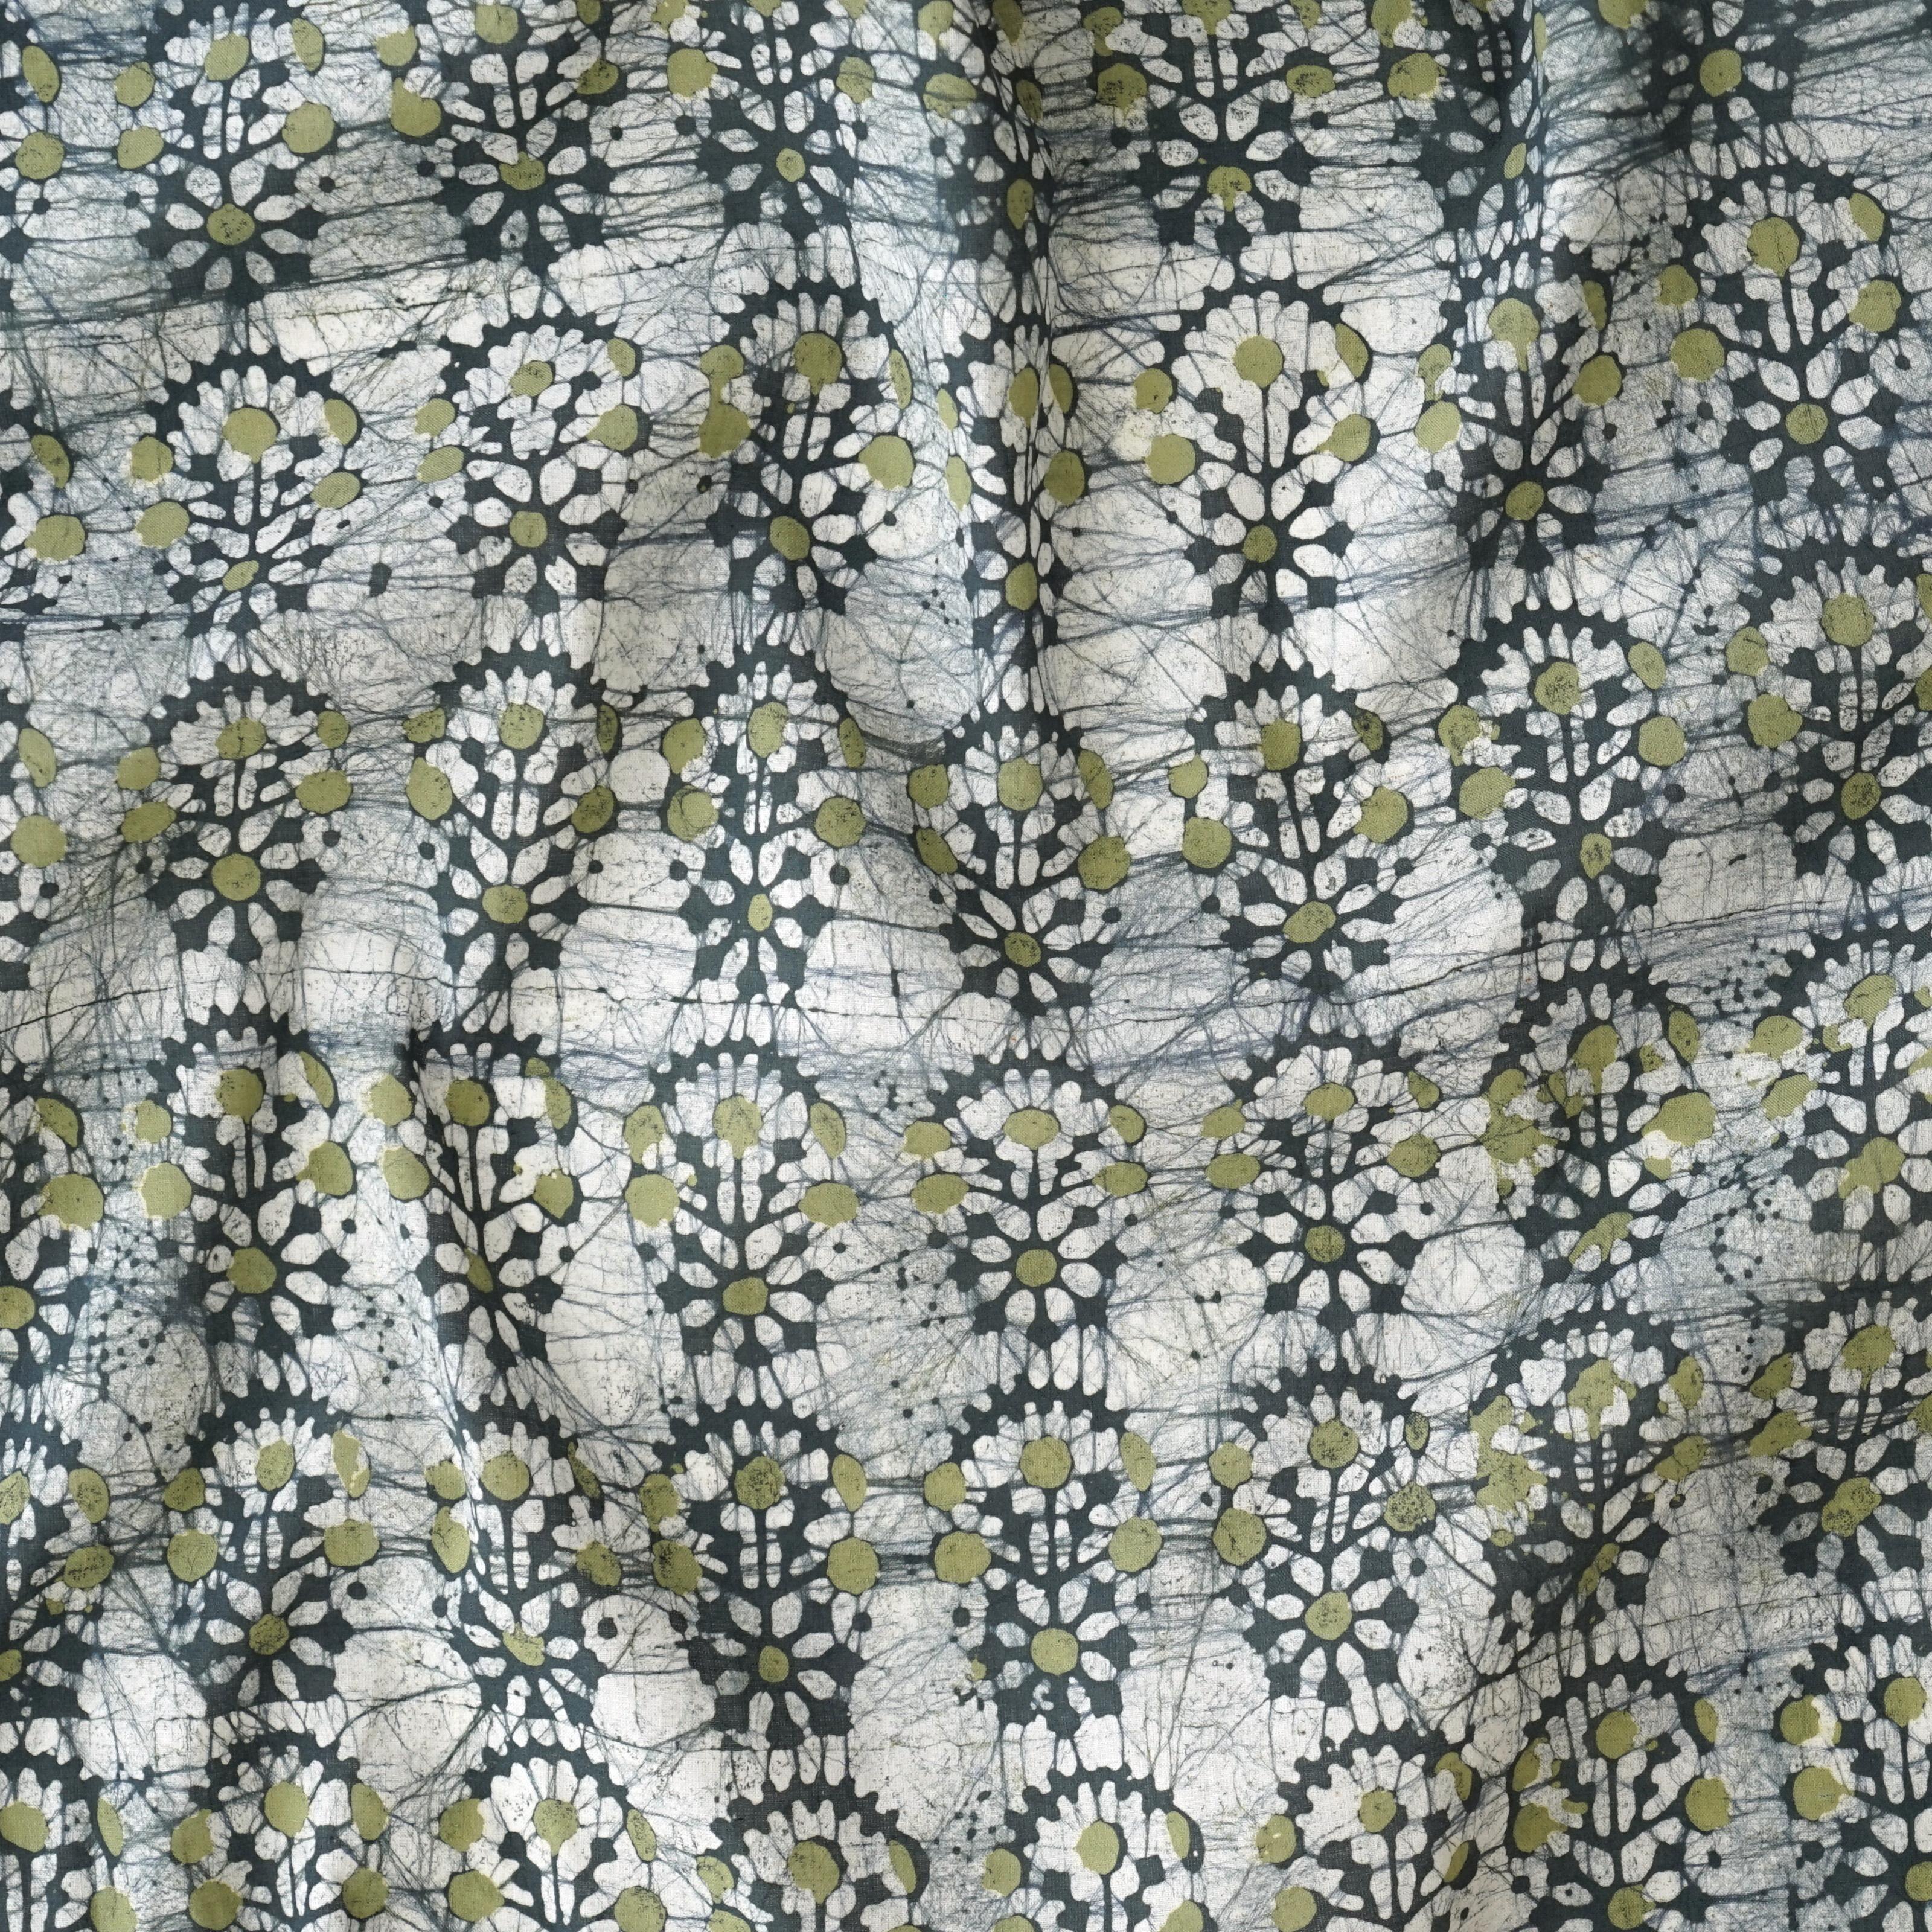 100% Block-Printed Batik Cotton Fabric From India - Seahorse Motif - Contrast